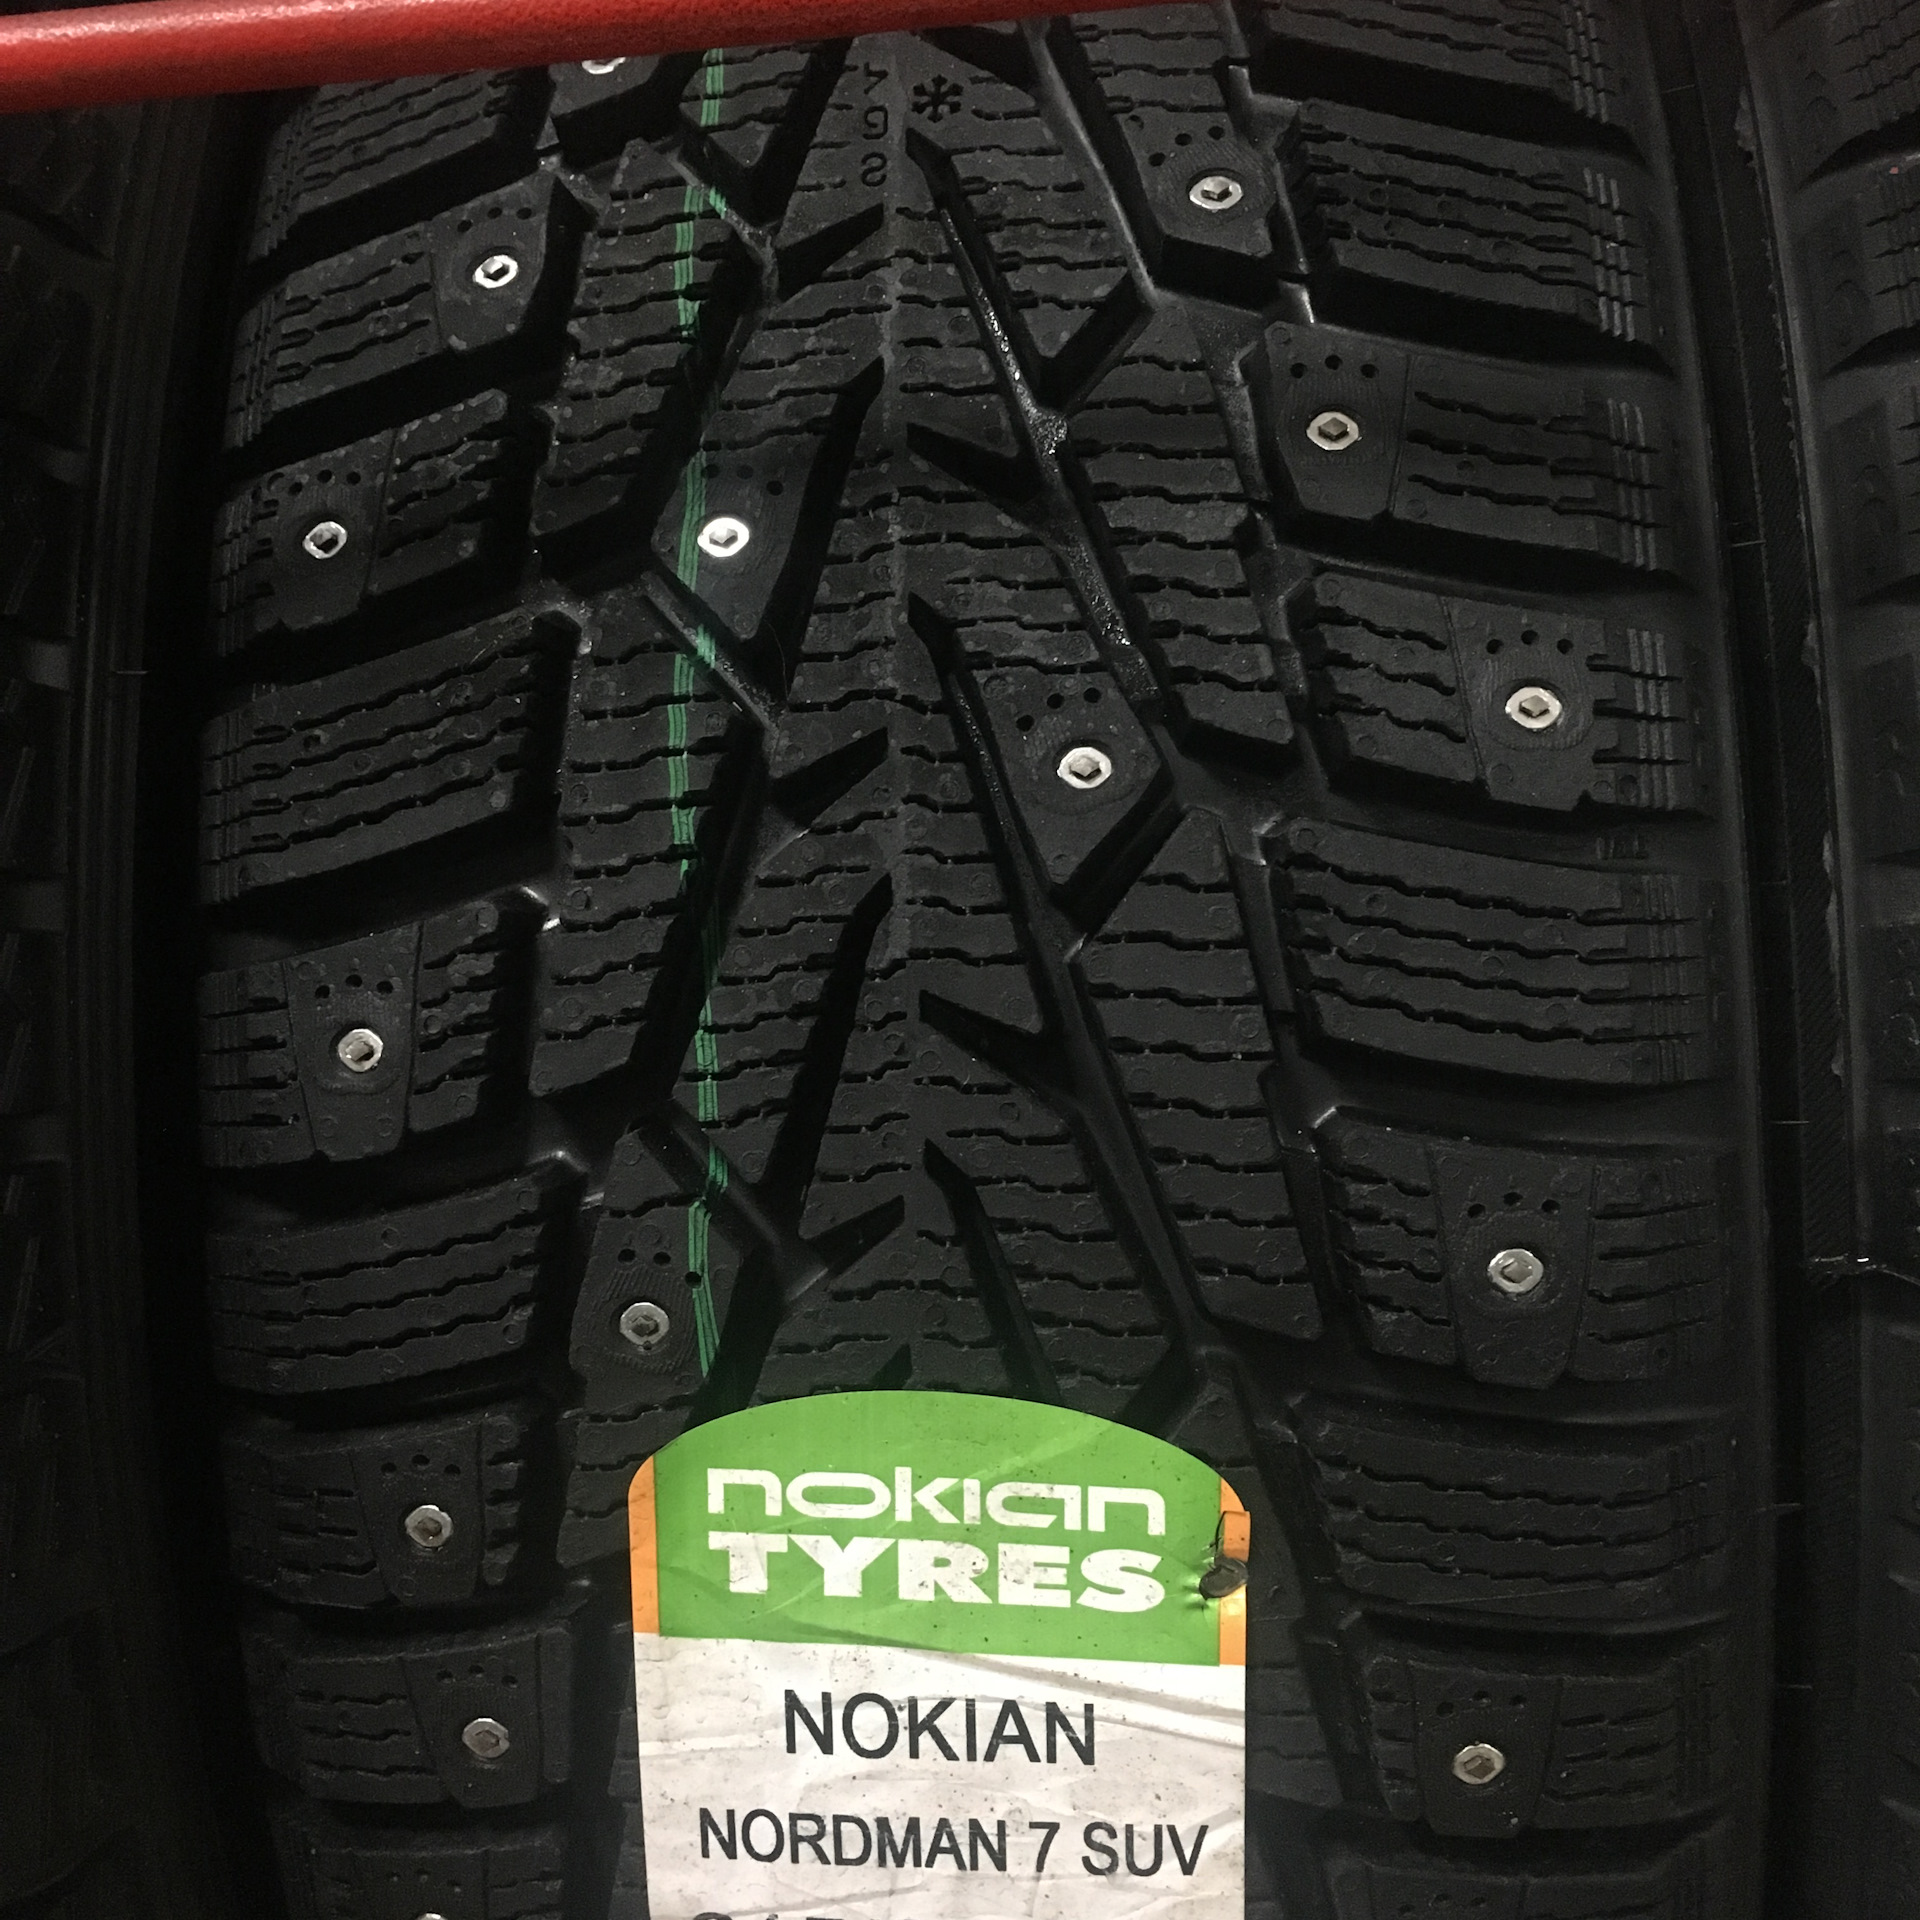 Tyres nordman 8 отзывы. Нордман 7 SUV. Nokian Nordman 7 SUV. Nokian Tyres Nordman 7 SUV. Нордман 7 SUV 215 65 16.